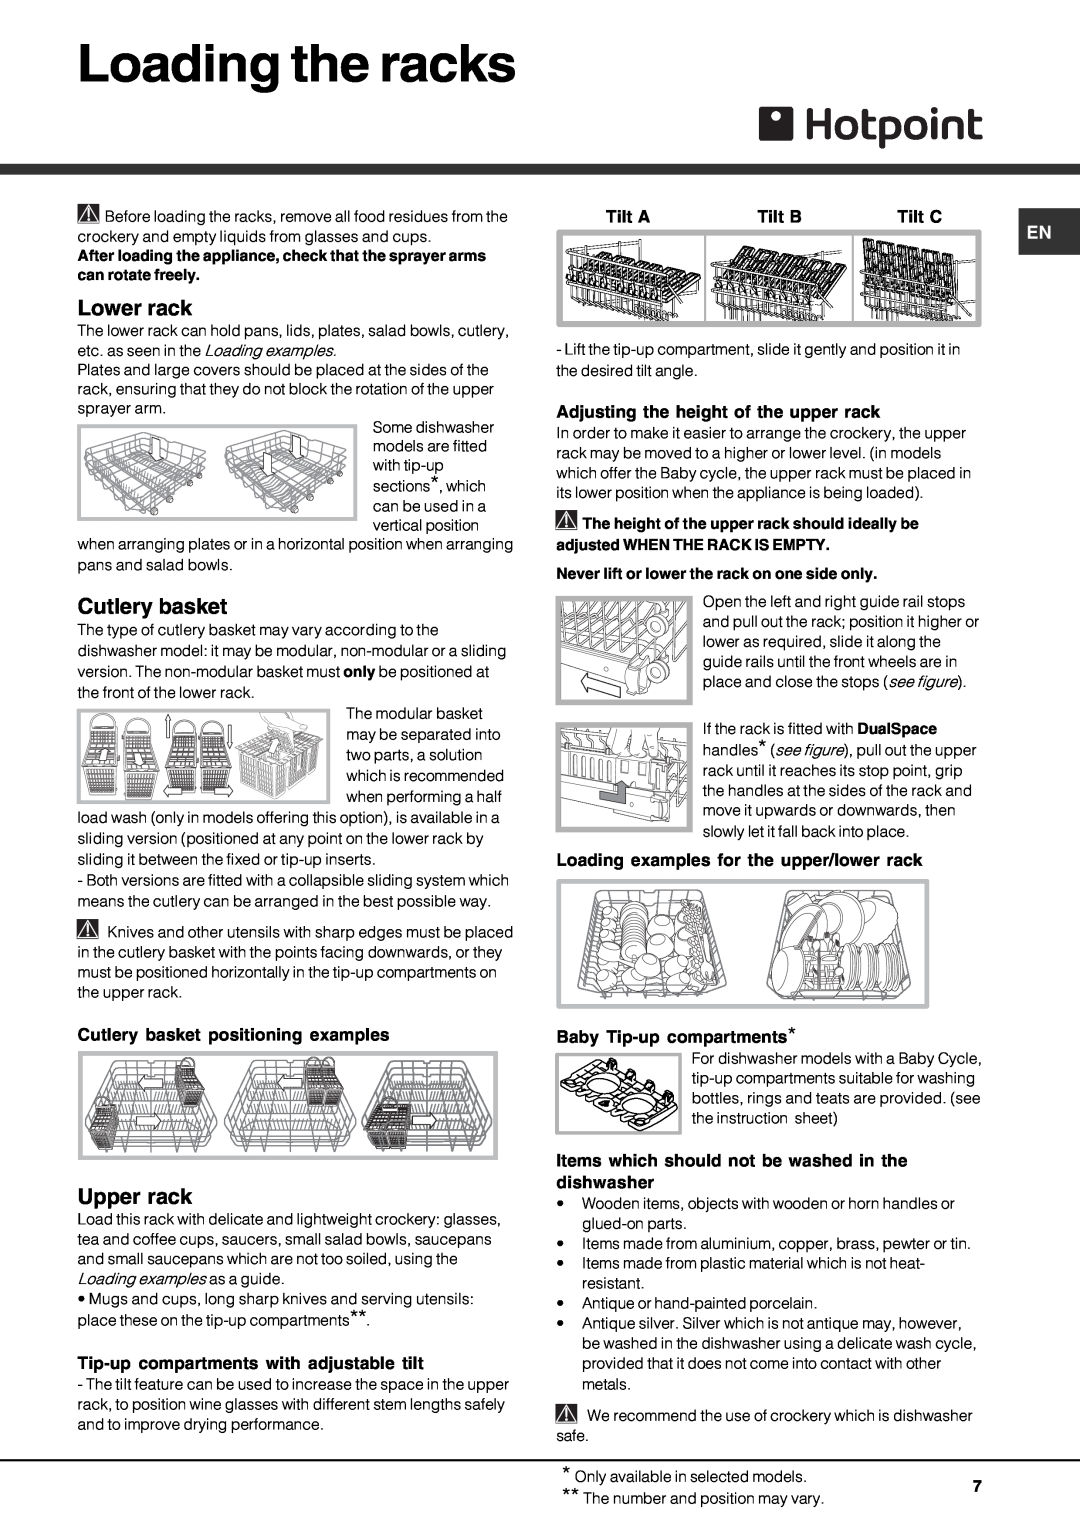 Hotpoint 1509)50-4 manual Loading the racks, Lower rack, Cutlery basket, Upper rack 